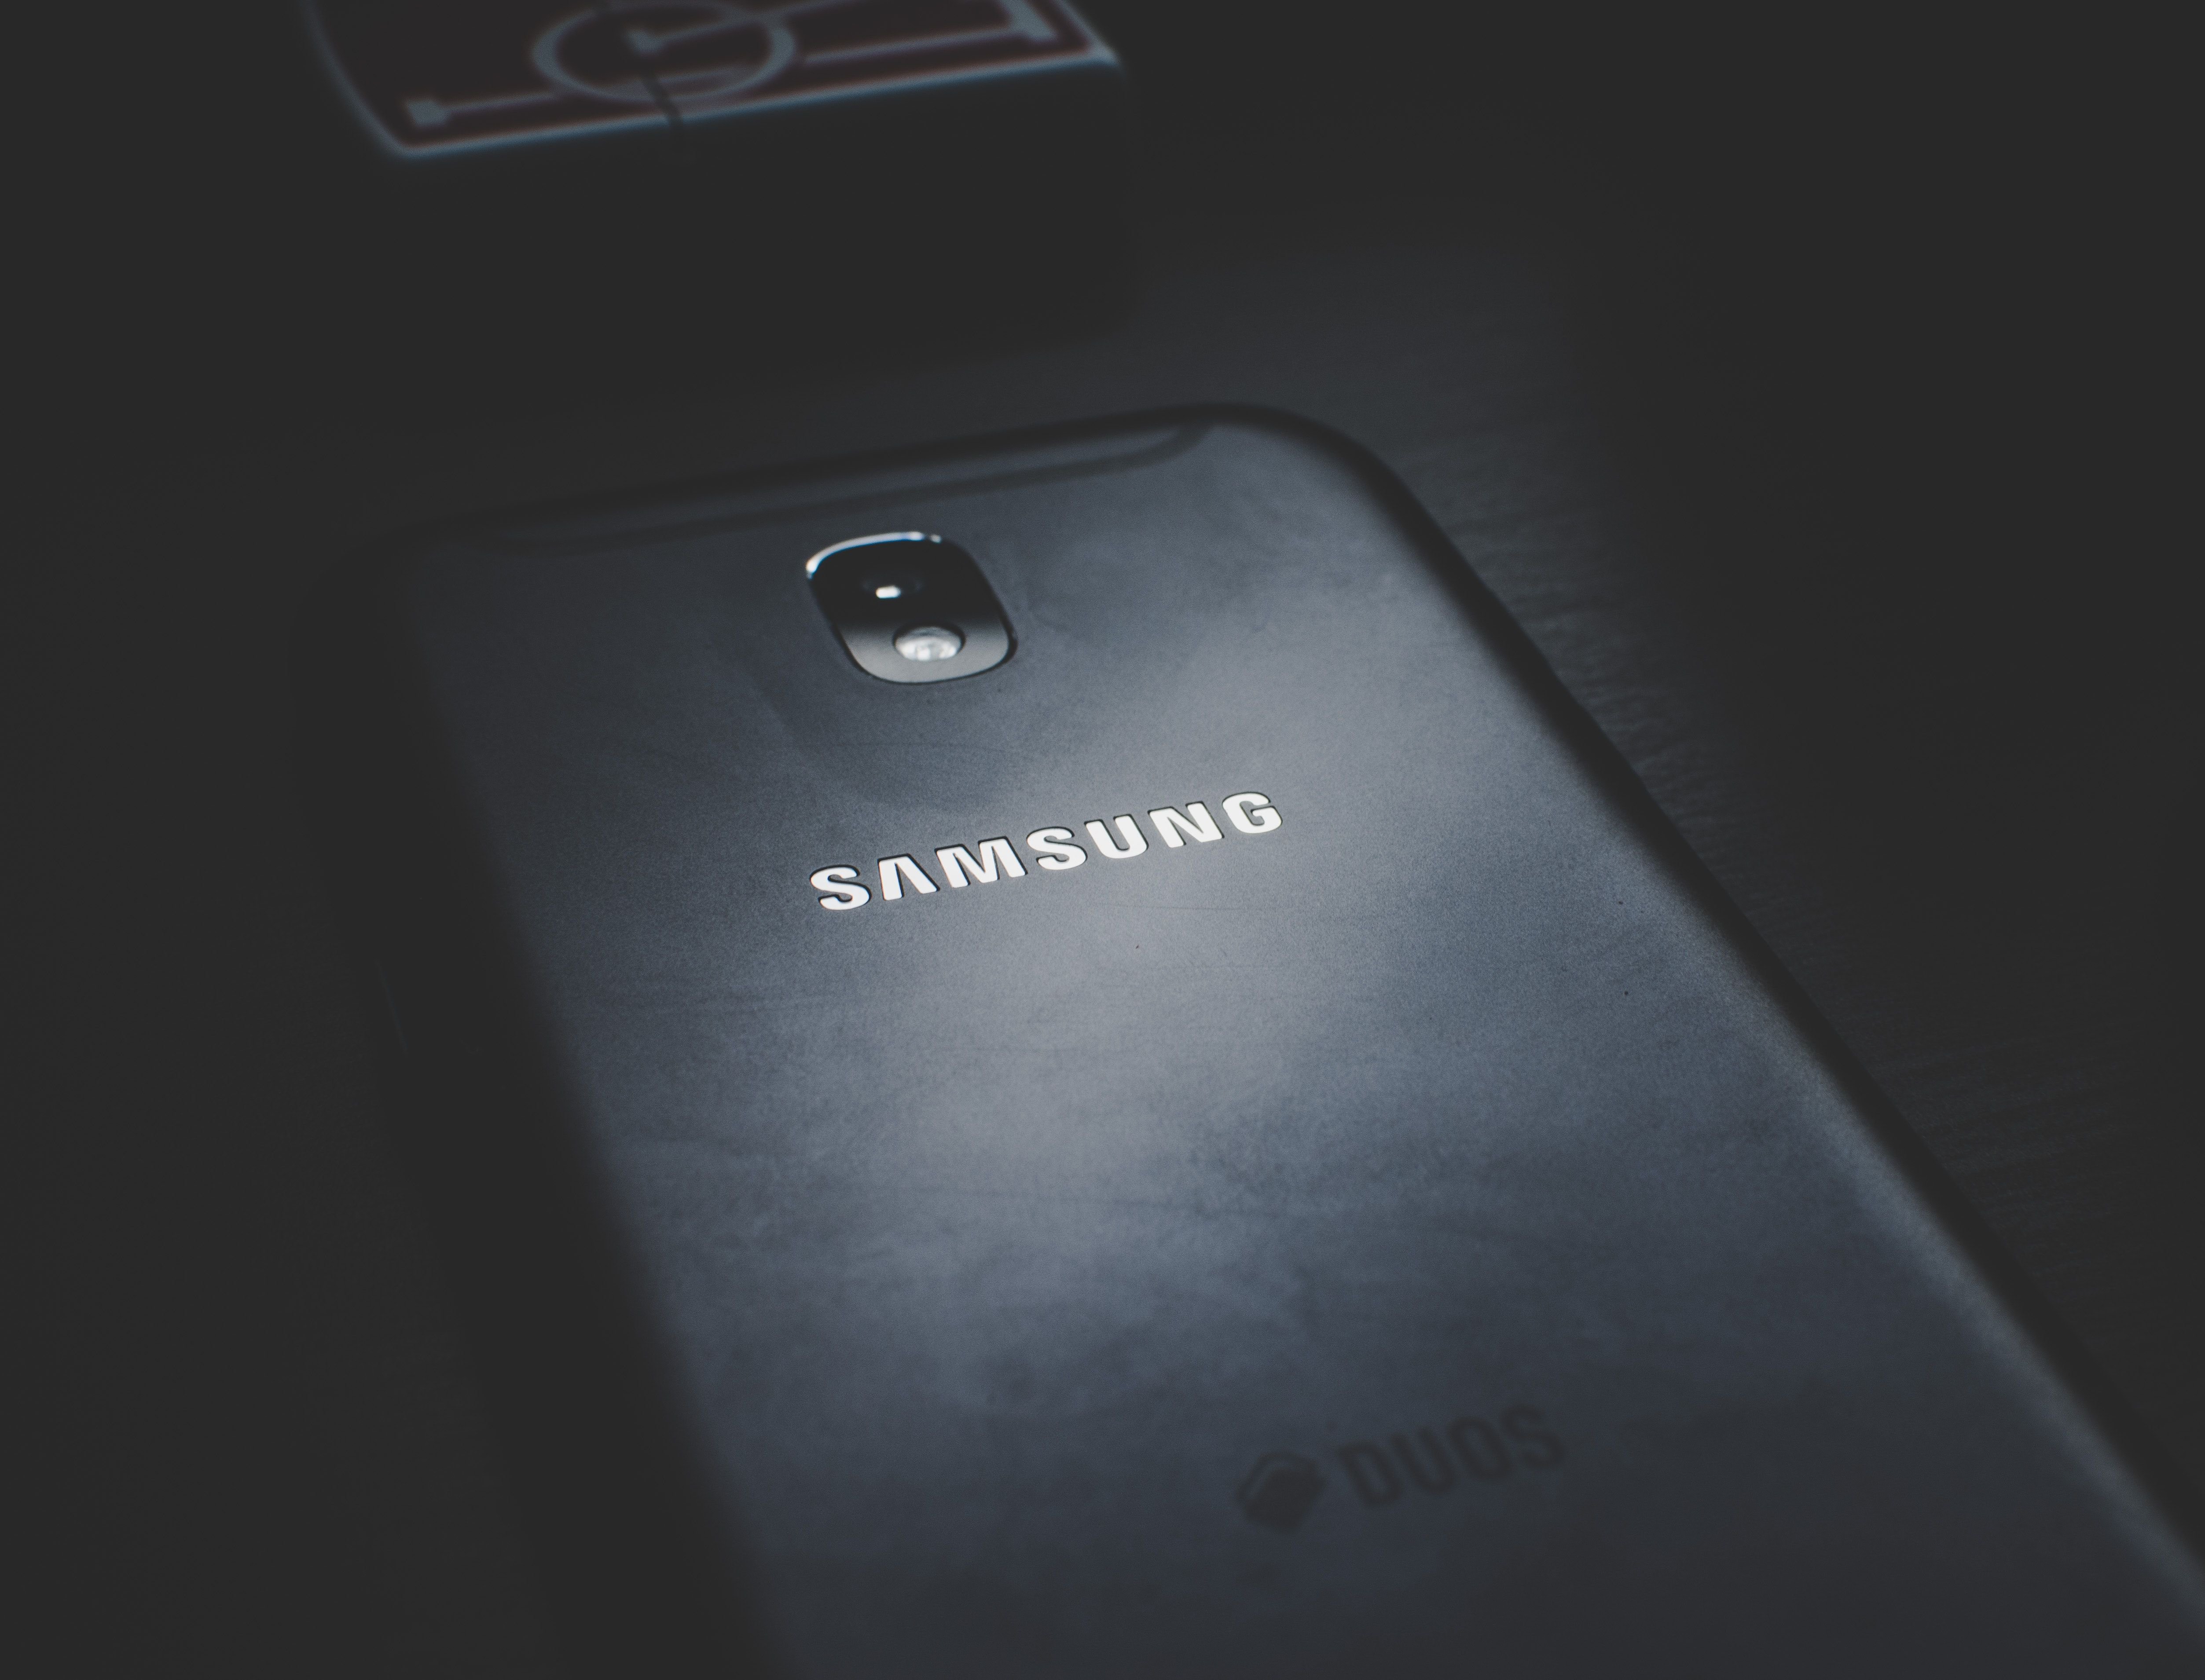 Samsung phone image